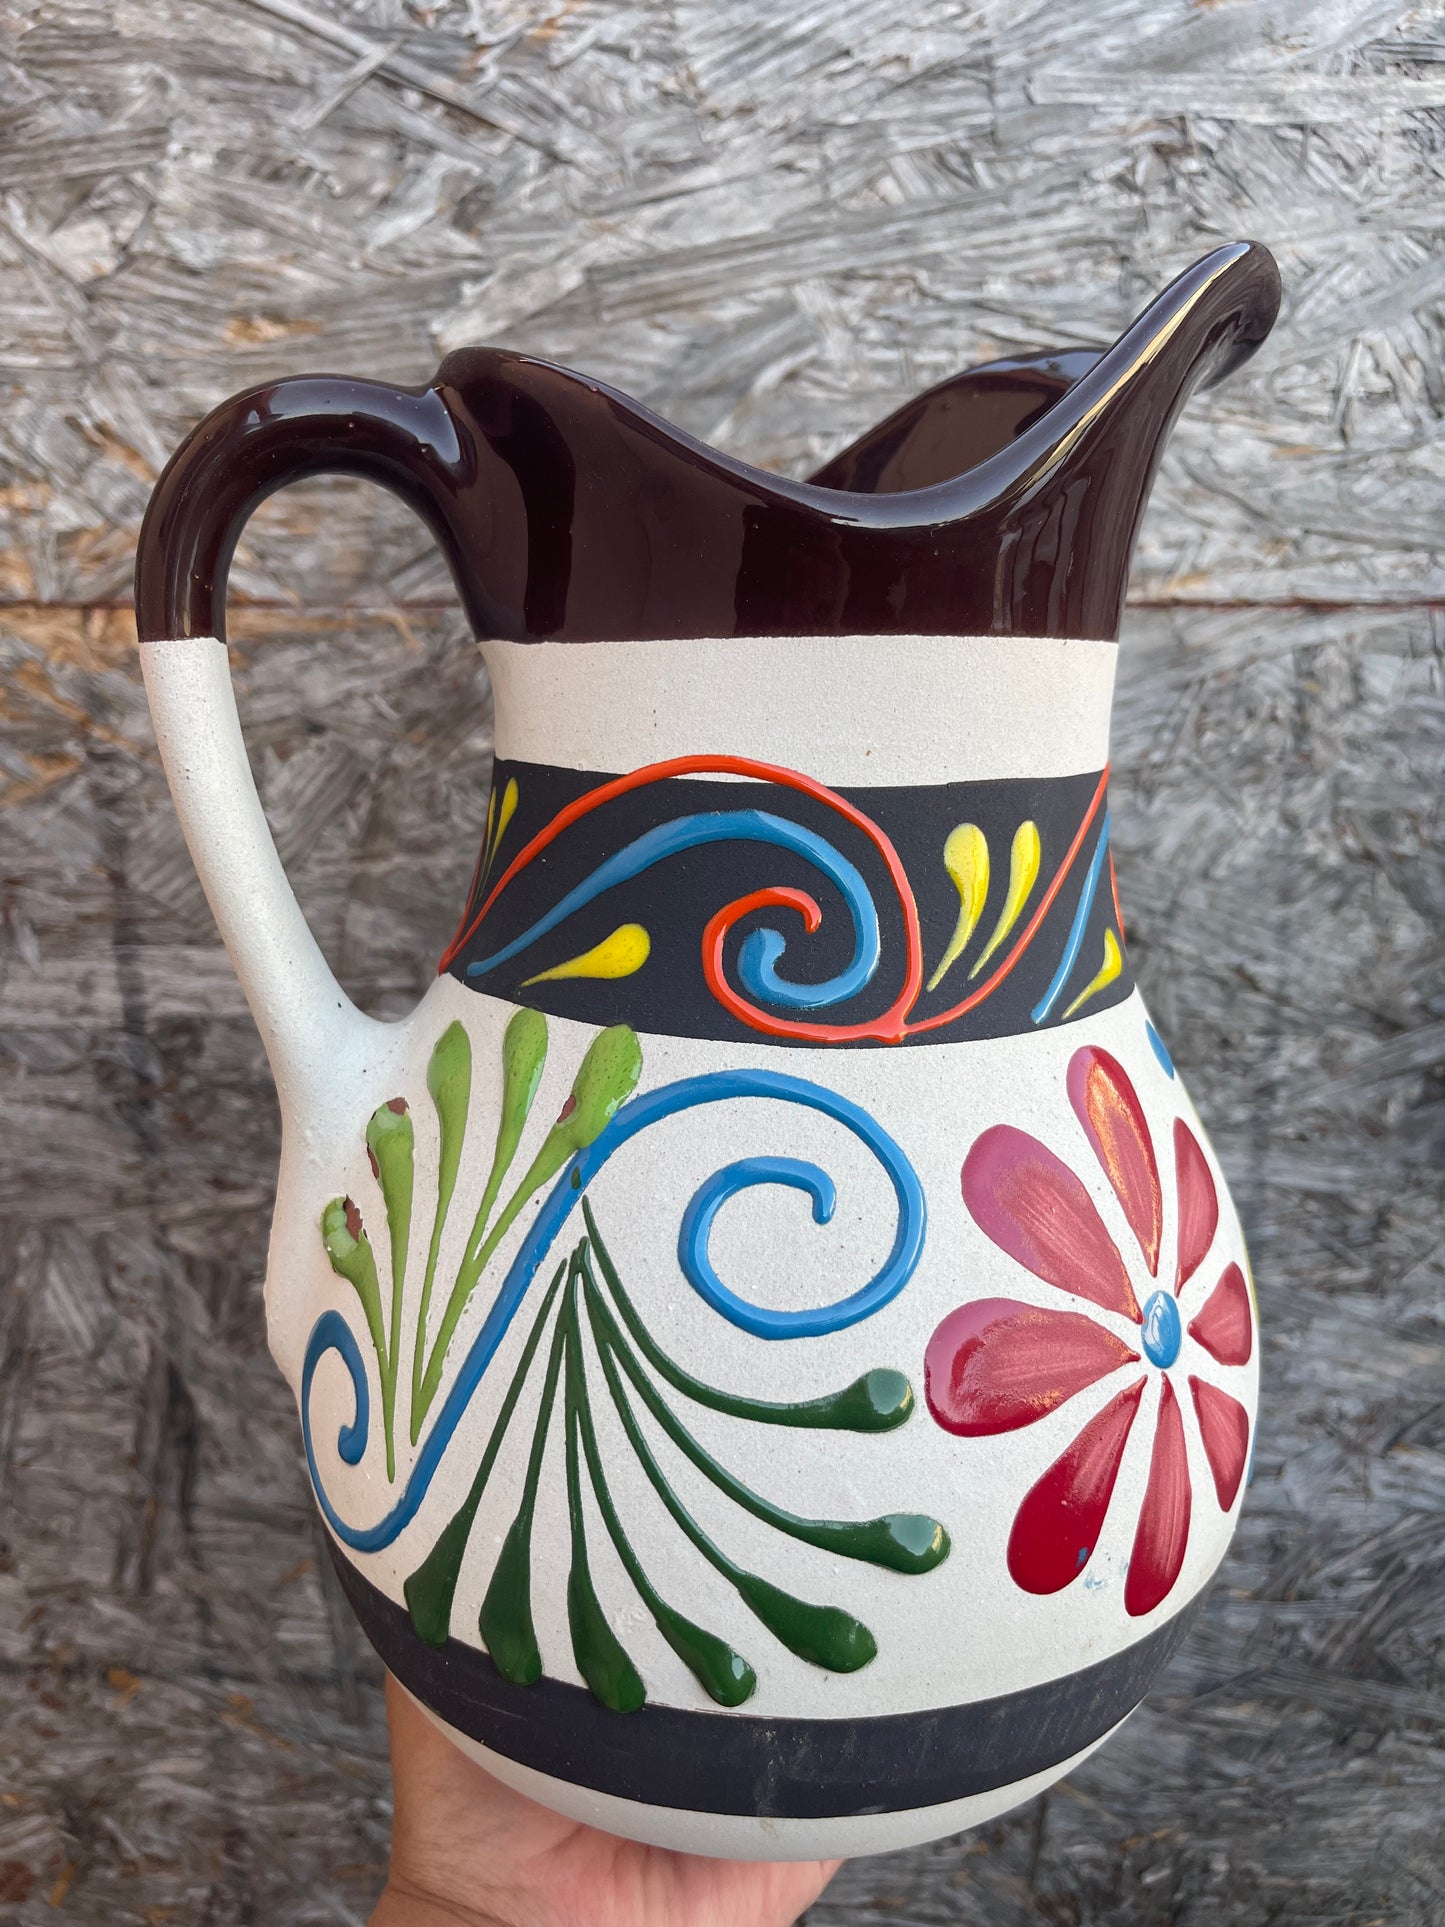 Guanajuato pottery/pitcher/jar/flower vase/agua fresca jar/decorated jar/hand painted pitcher/Guanajuato pottery pitcher/jar.